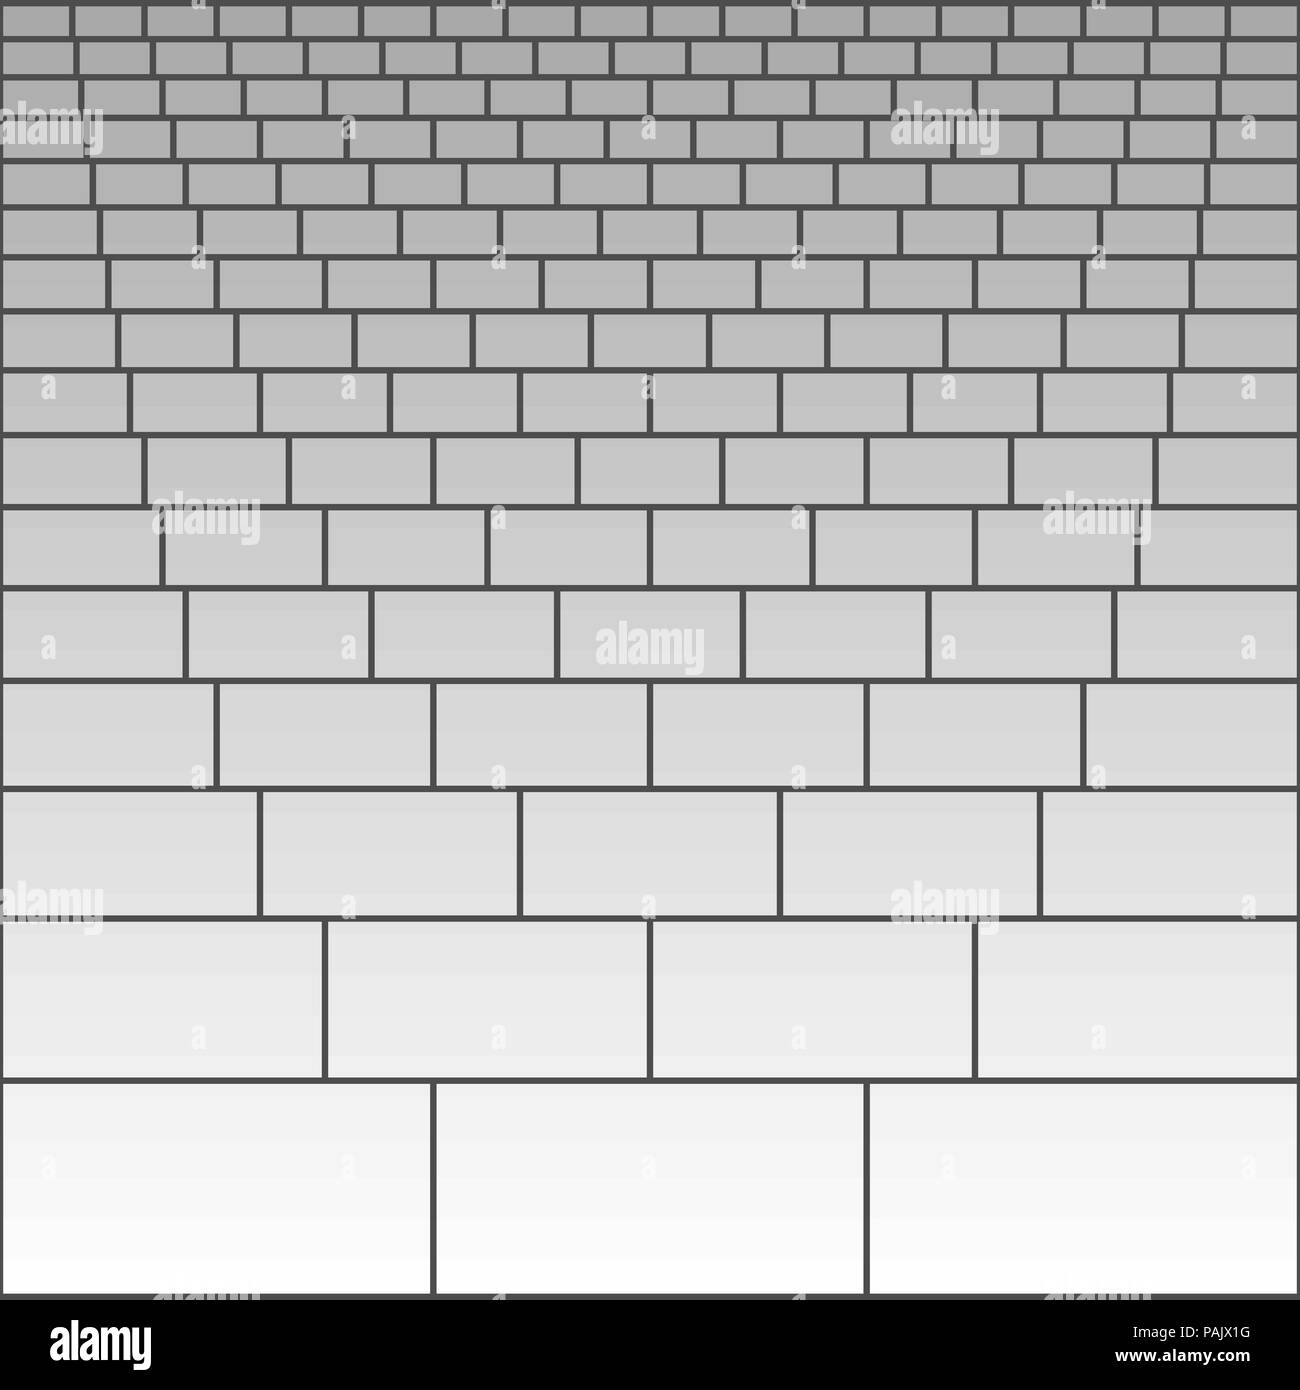 Brick wall pattern background flat vector illustration. Stock Vector